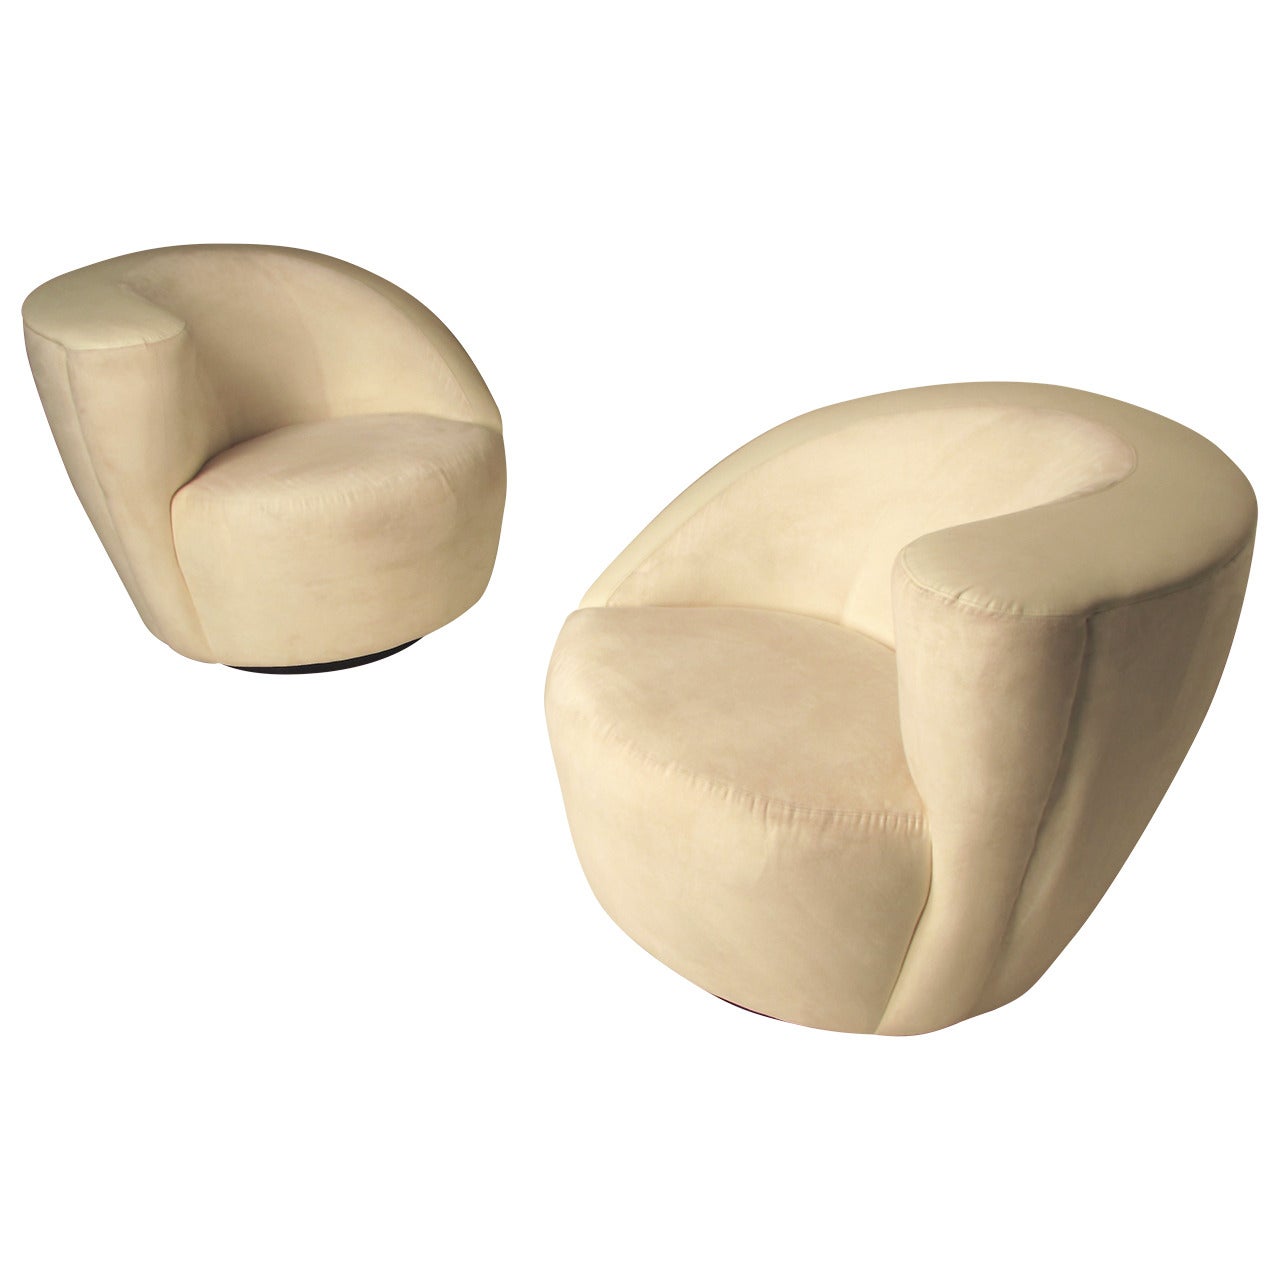 Pair of "Corkscrew" Nautilus Chairs by Vladimir Kagan for Directional